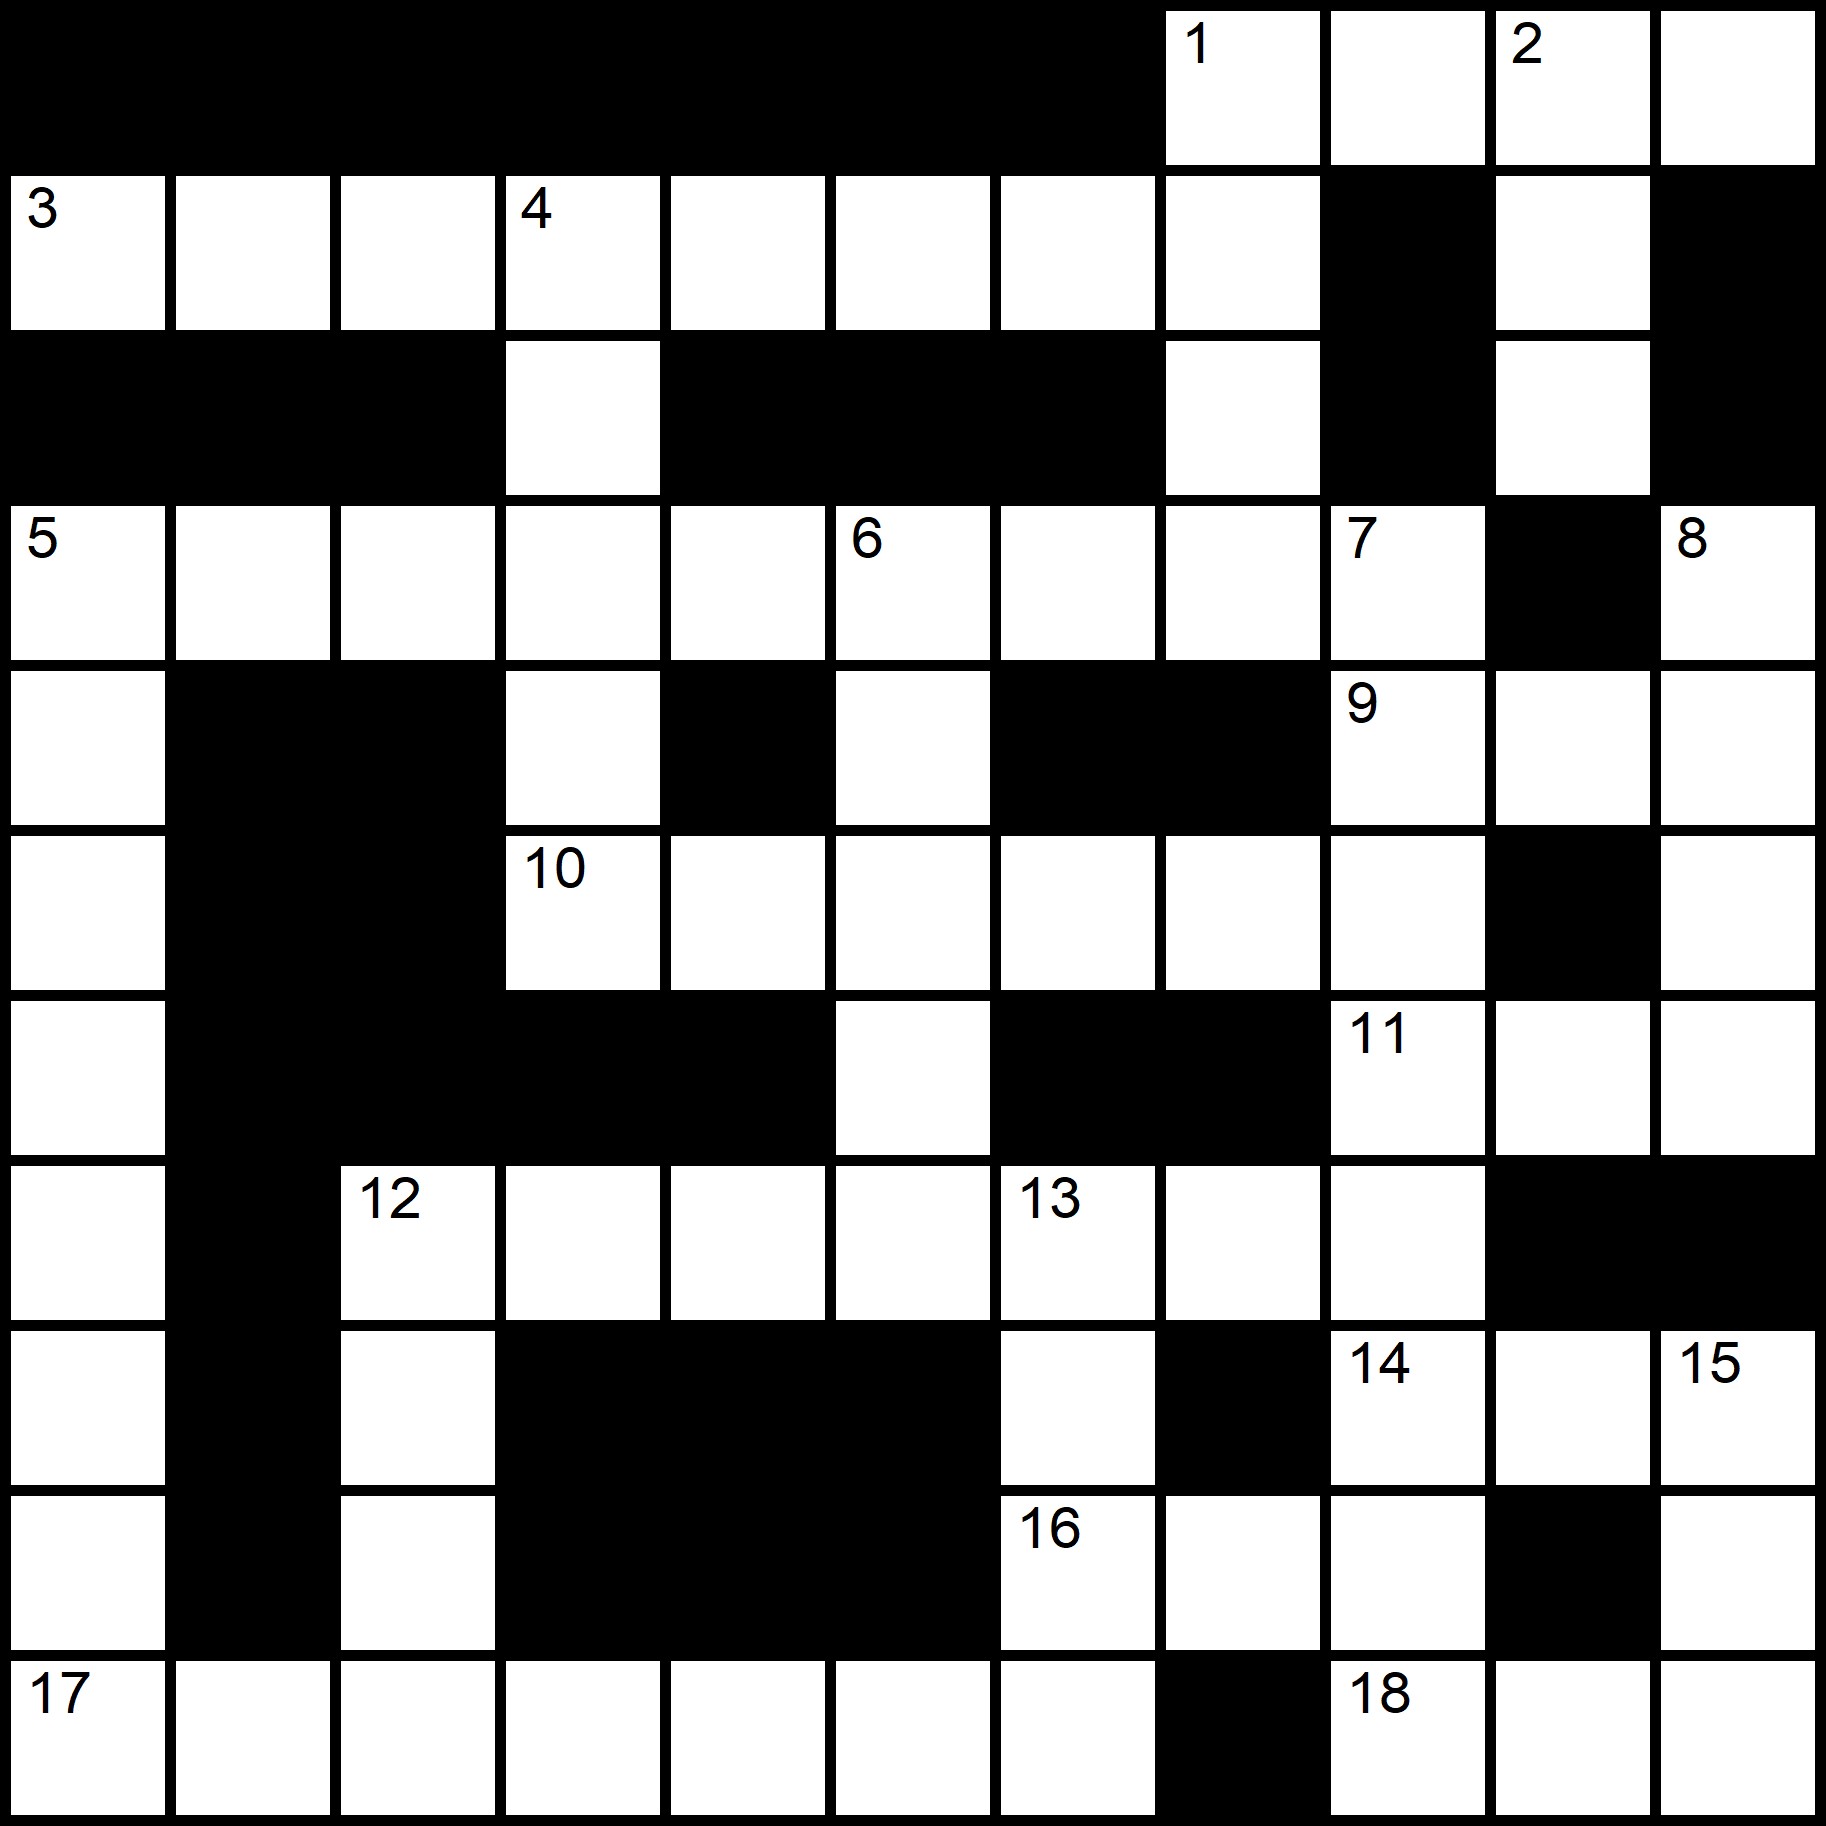 Easy Printable Crosswords For Beginners -
Placidus Flora - Crossword number twenty-six